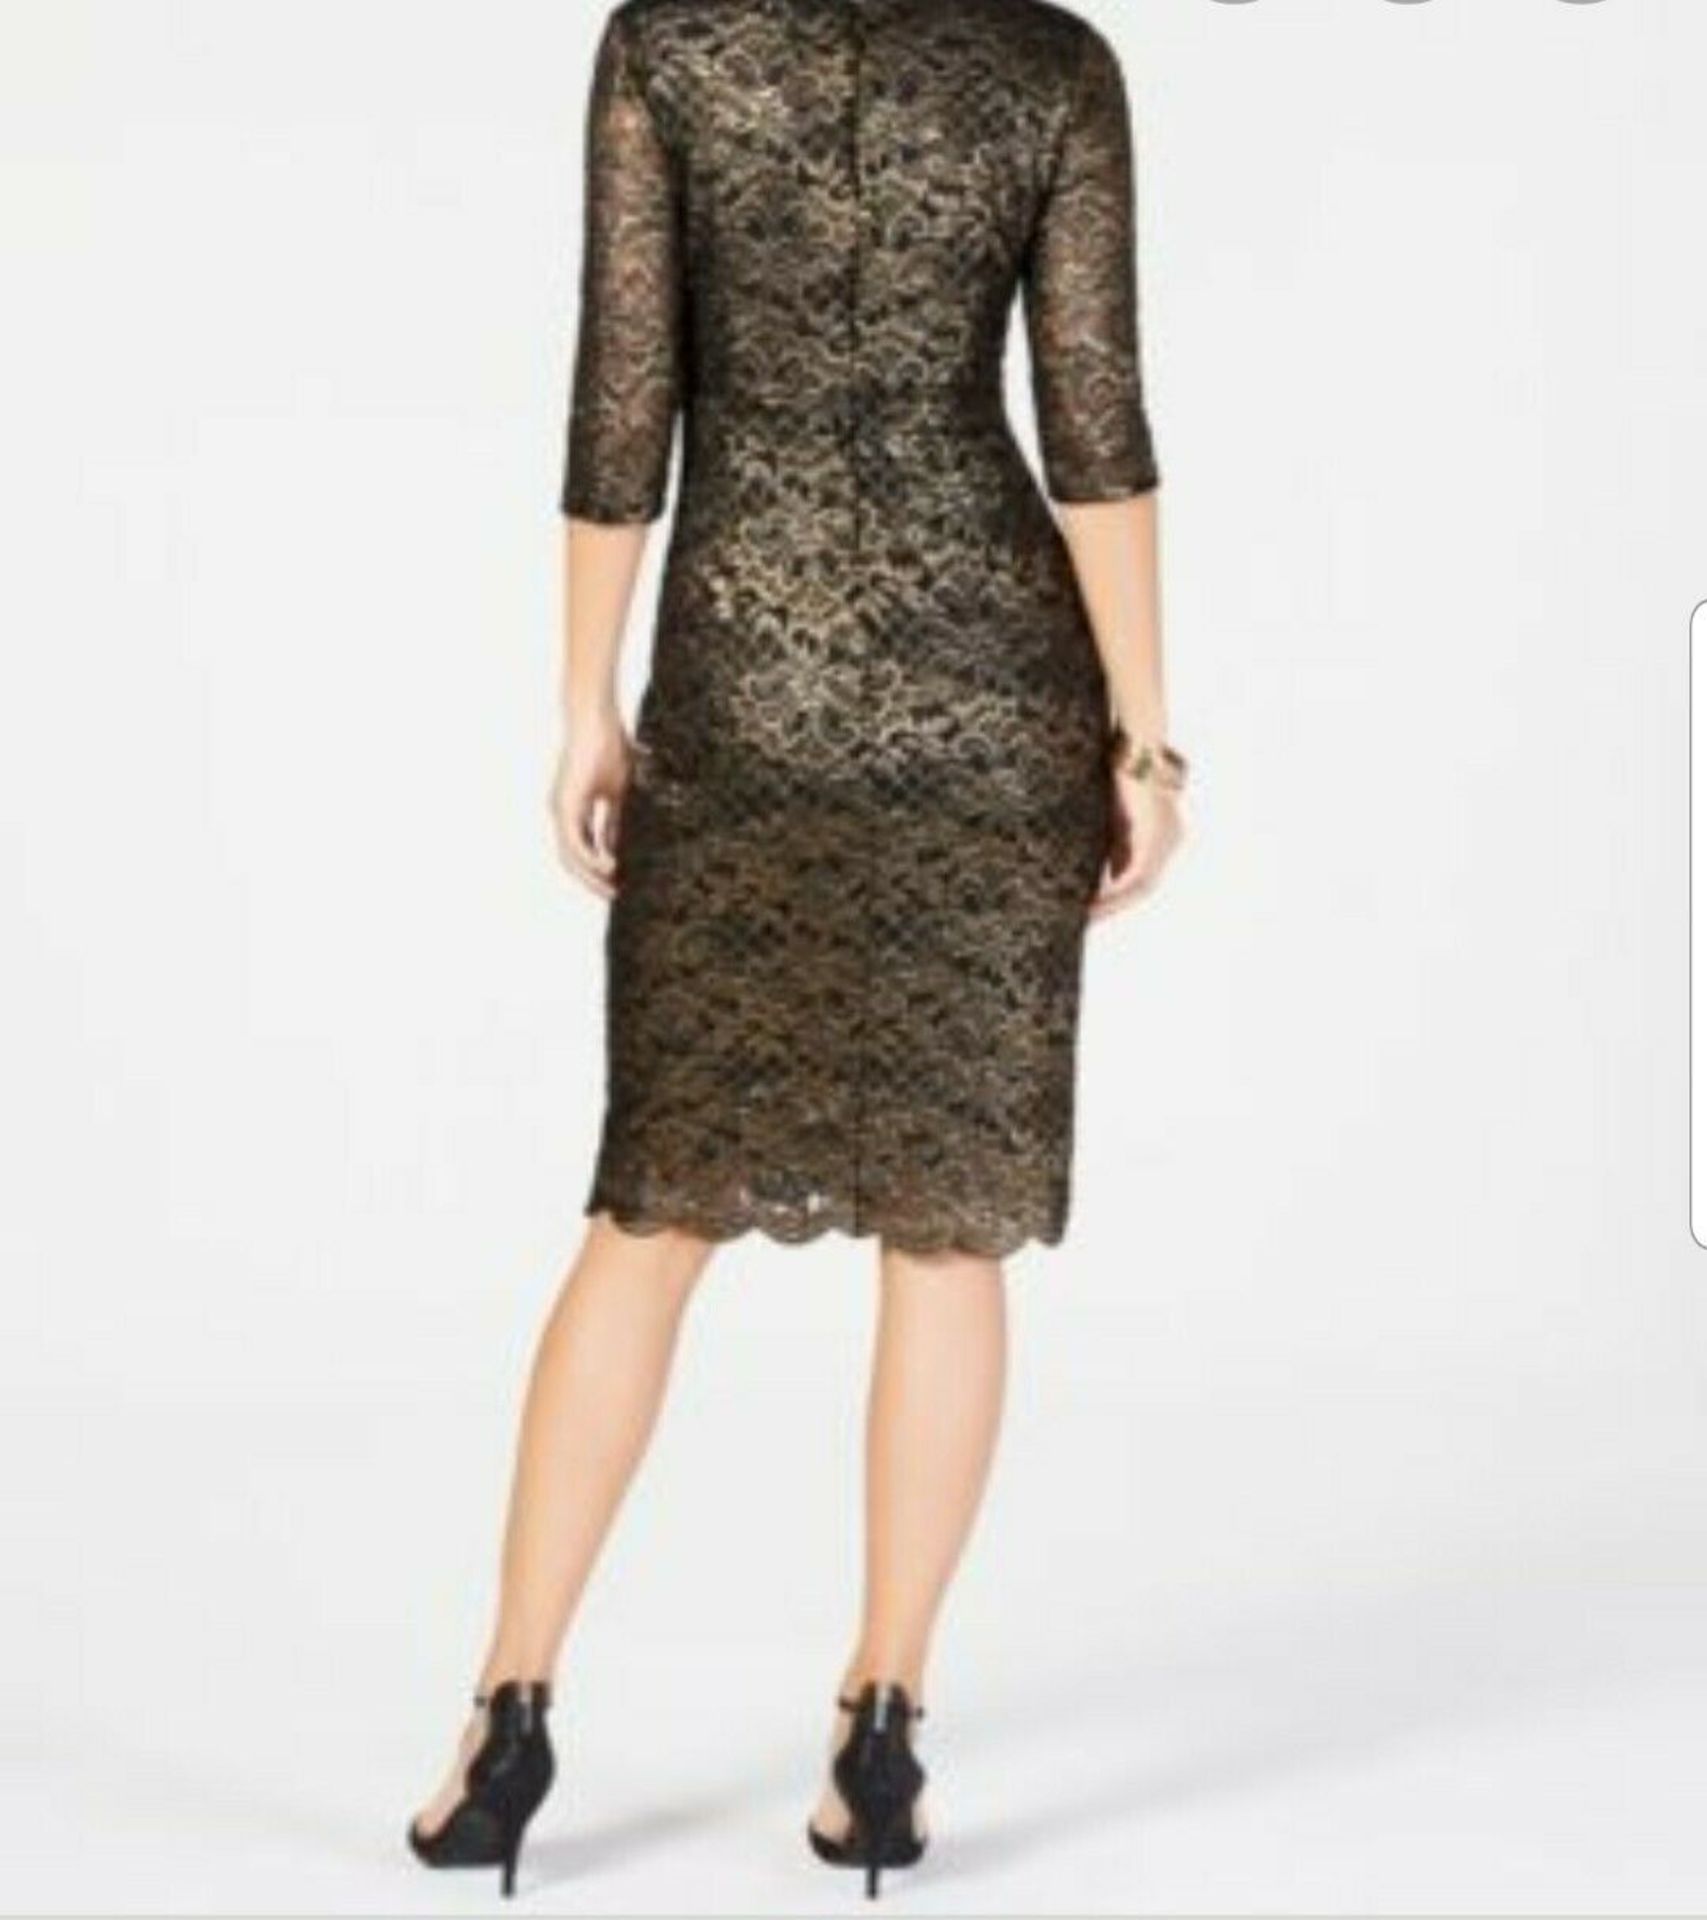 Thalia Sodi Metallic Lace Dress - Sexy Deep Black Size Xs - Image 3 of 3